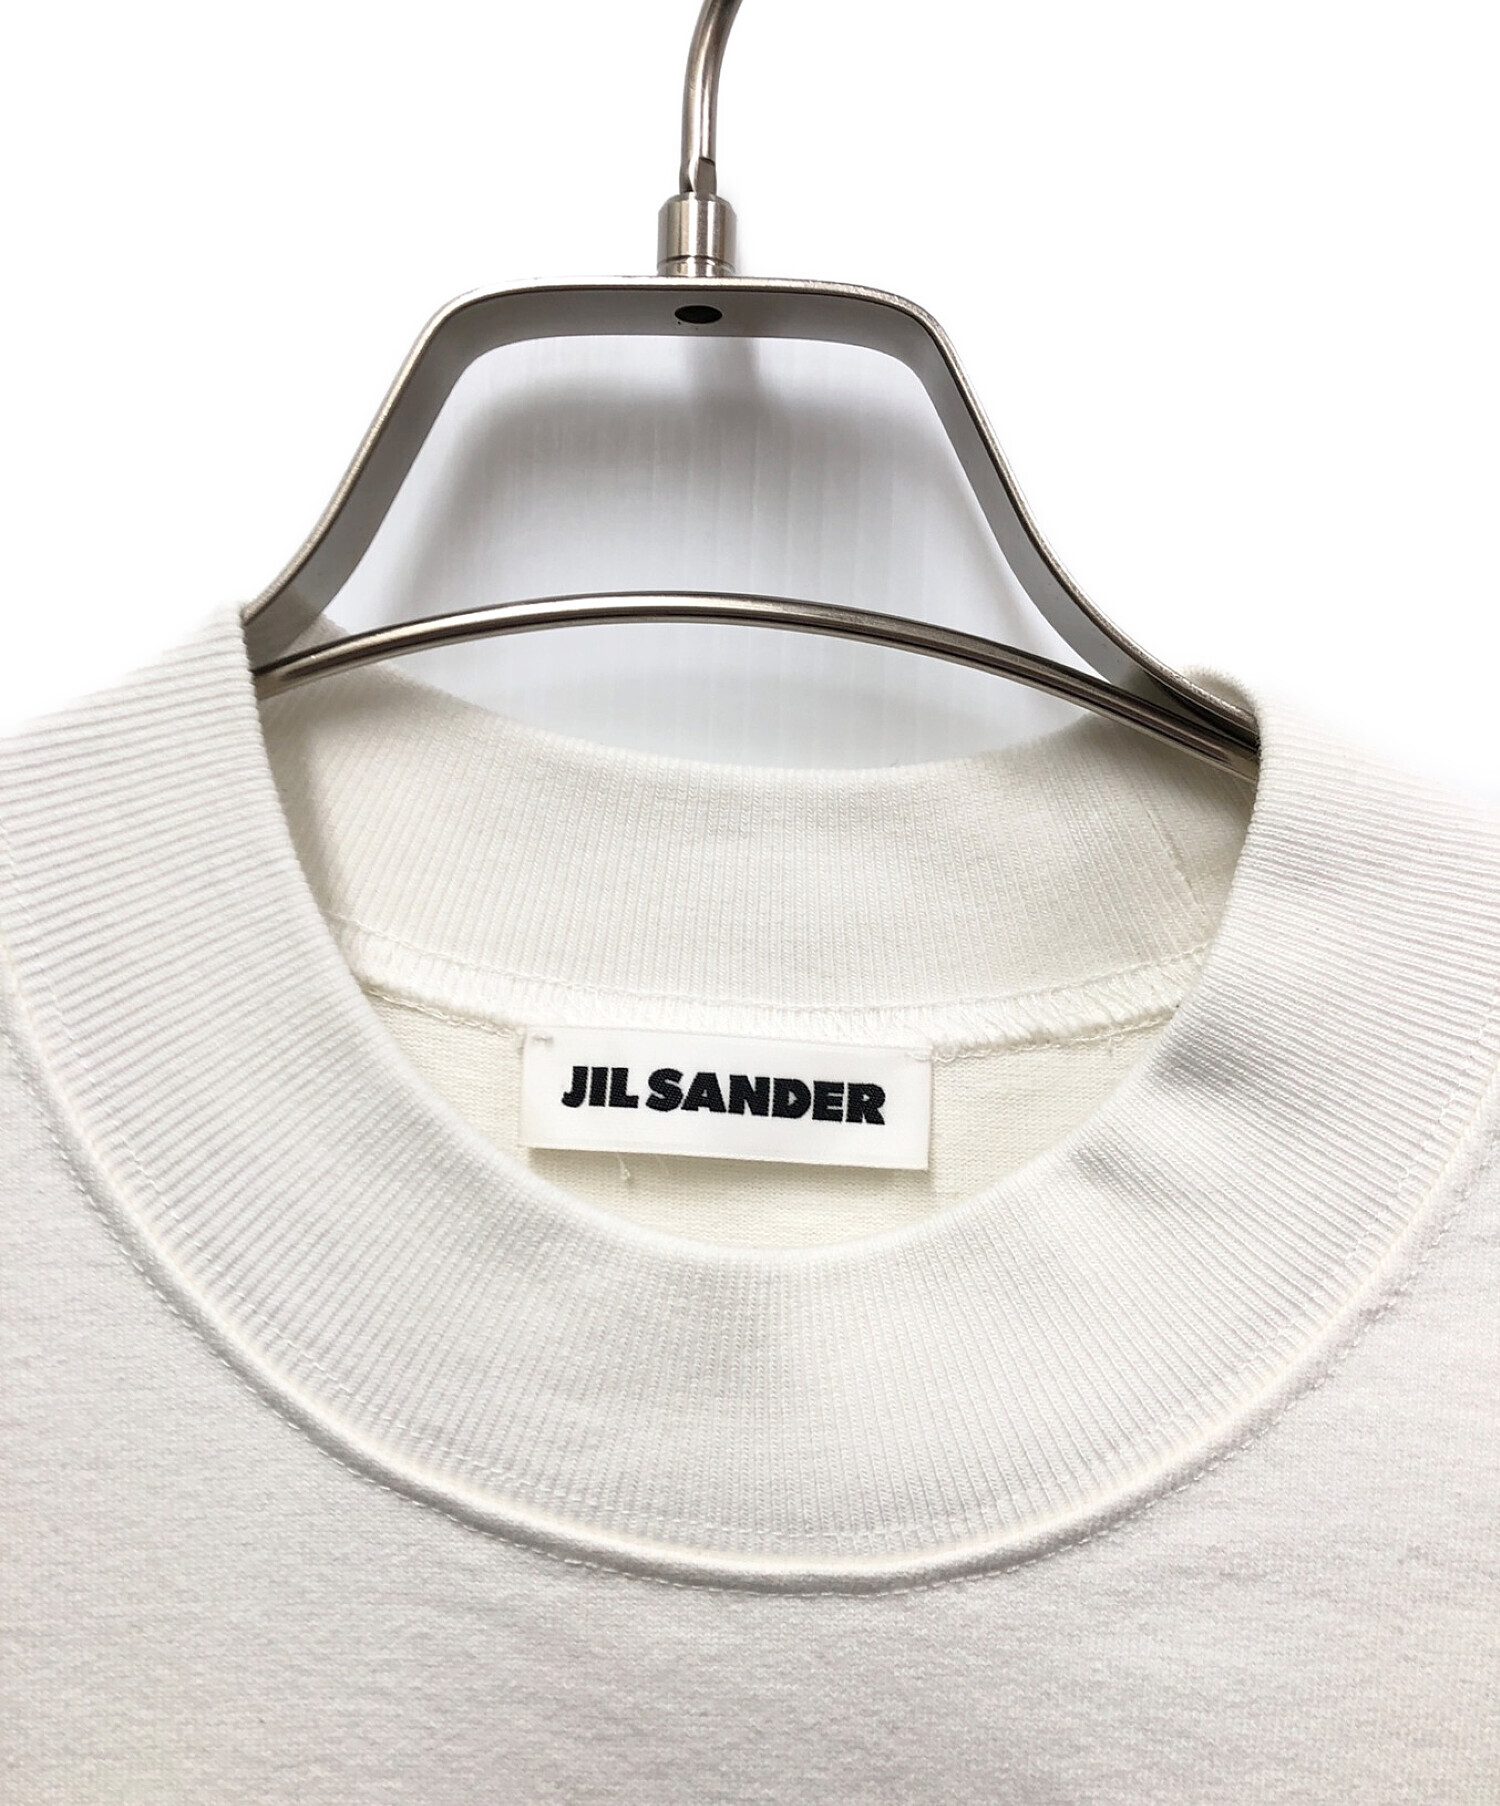 JIL SANDER ジルサンダー LOGO T-SHIRT ロゴ プリントTシャツ KK JM ZI 0008 ホワイト